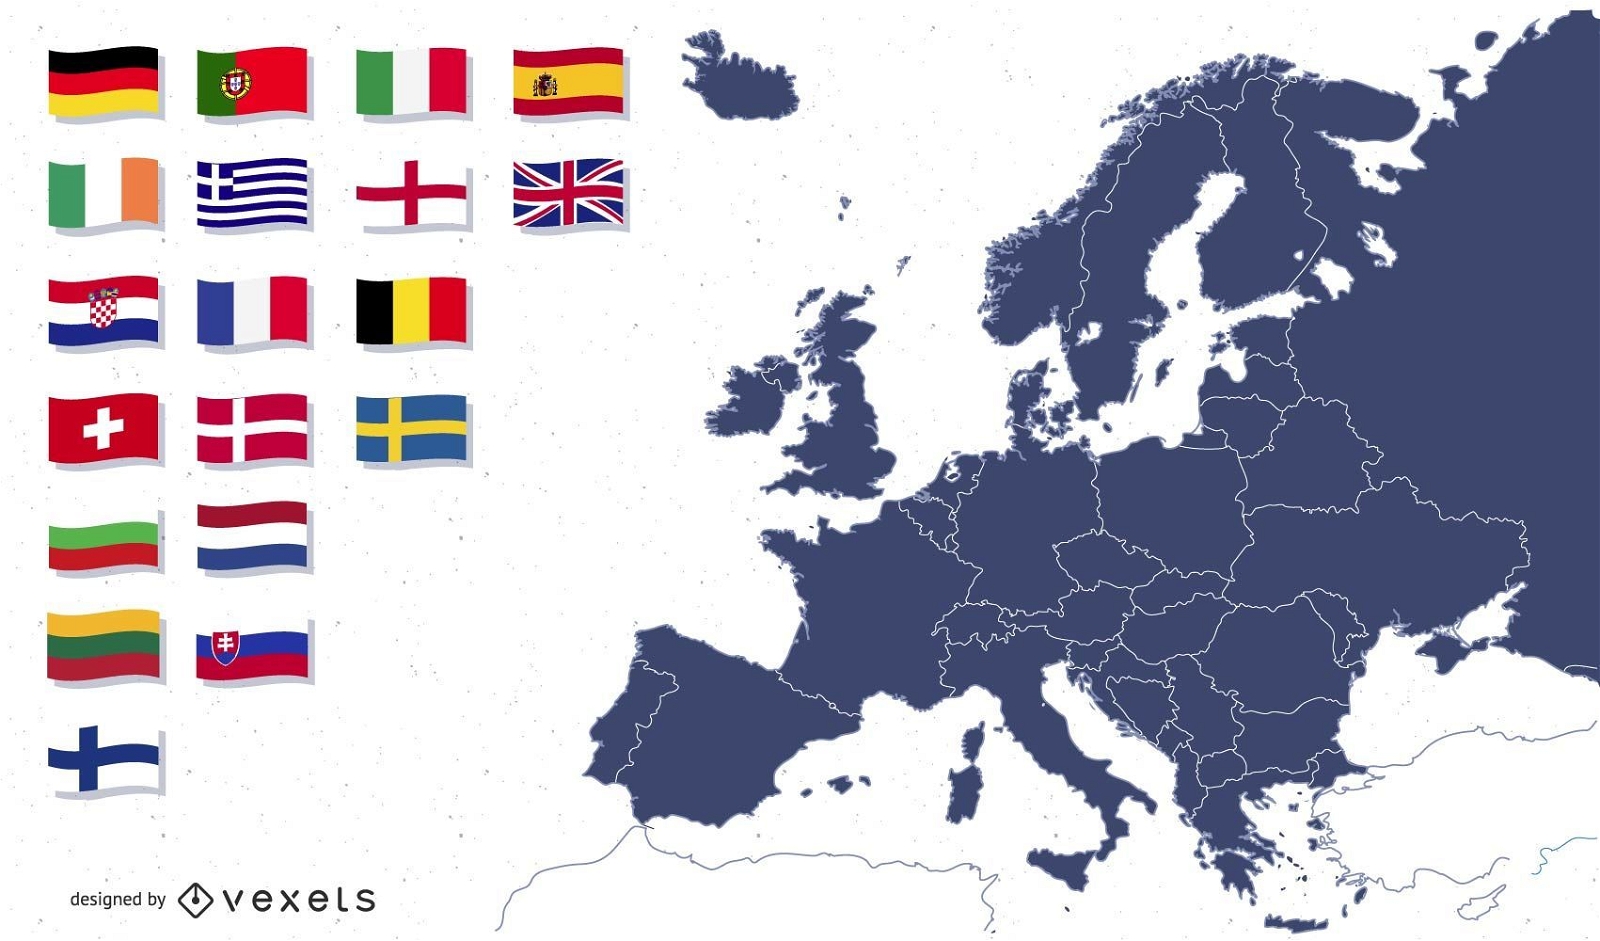 Mapa da Europa com ilustra??o de bandeiras